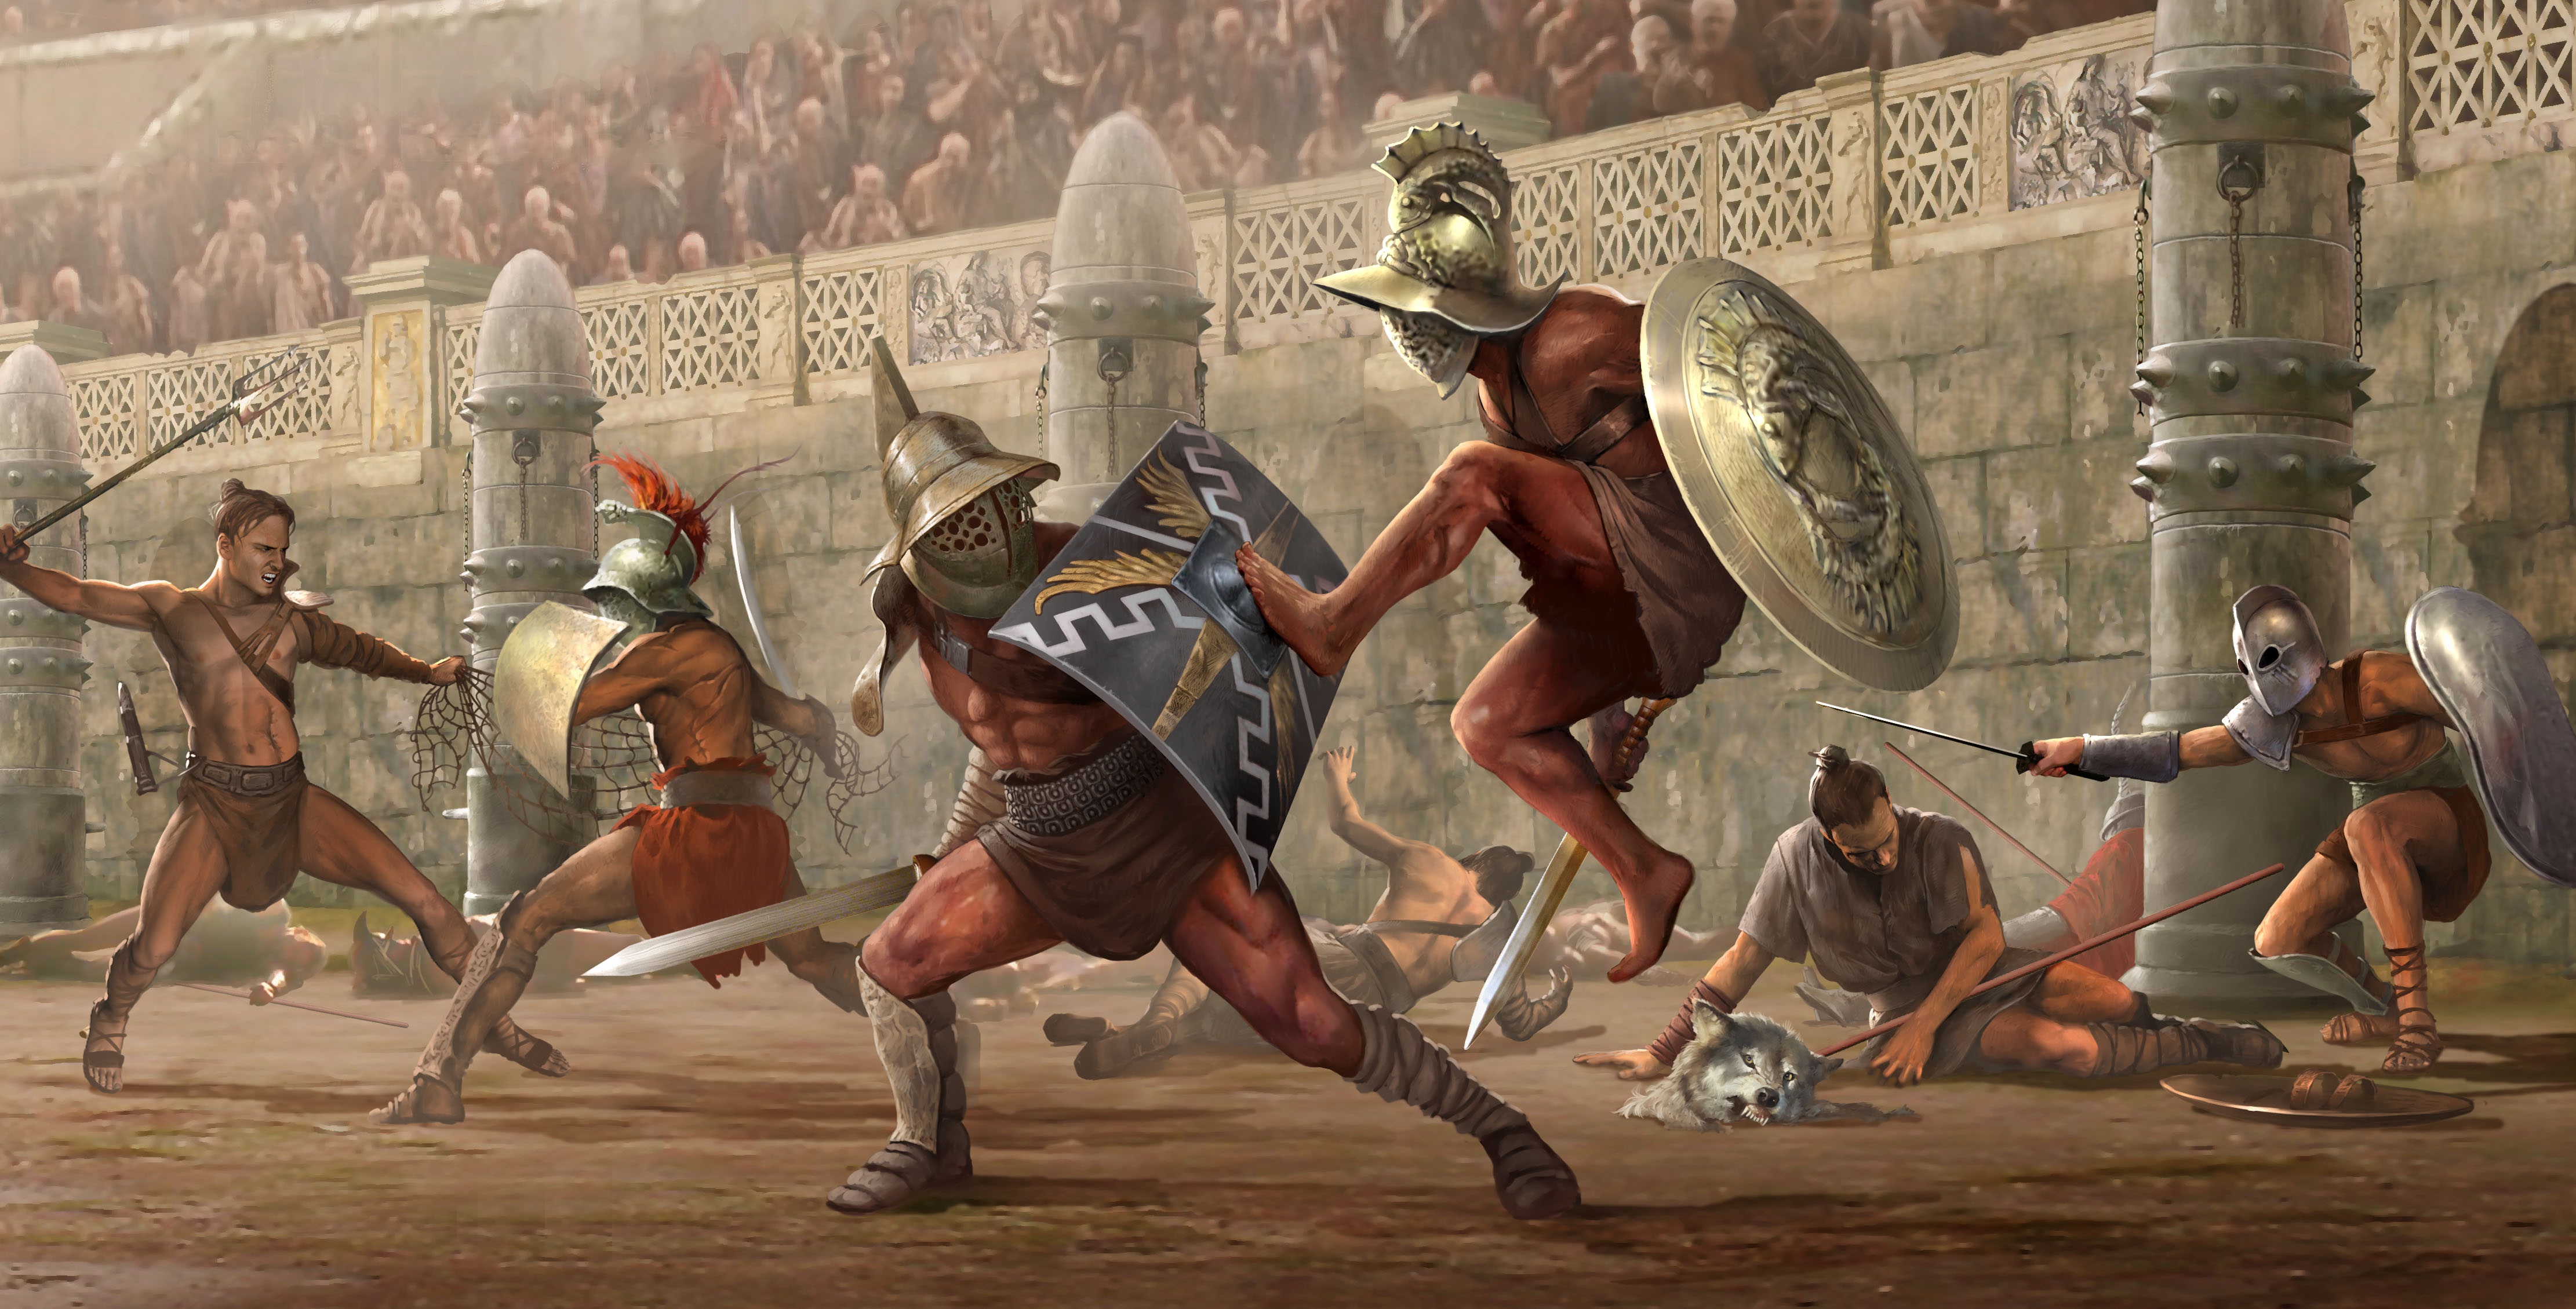 gladiator wallpaper